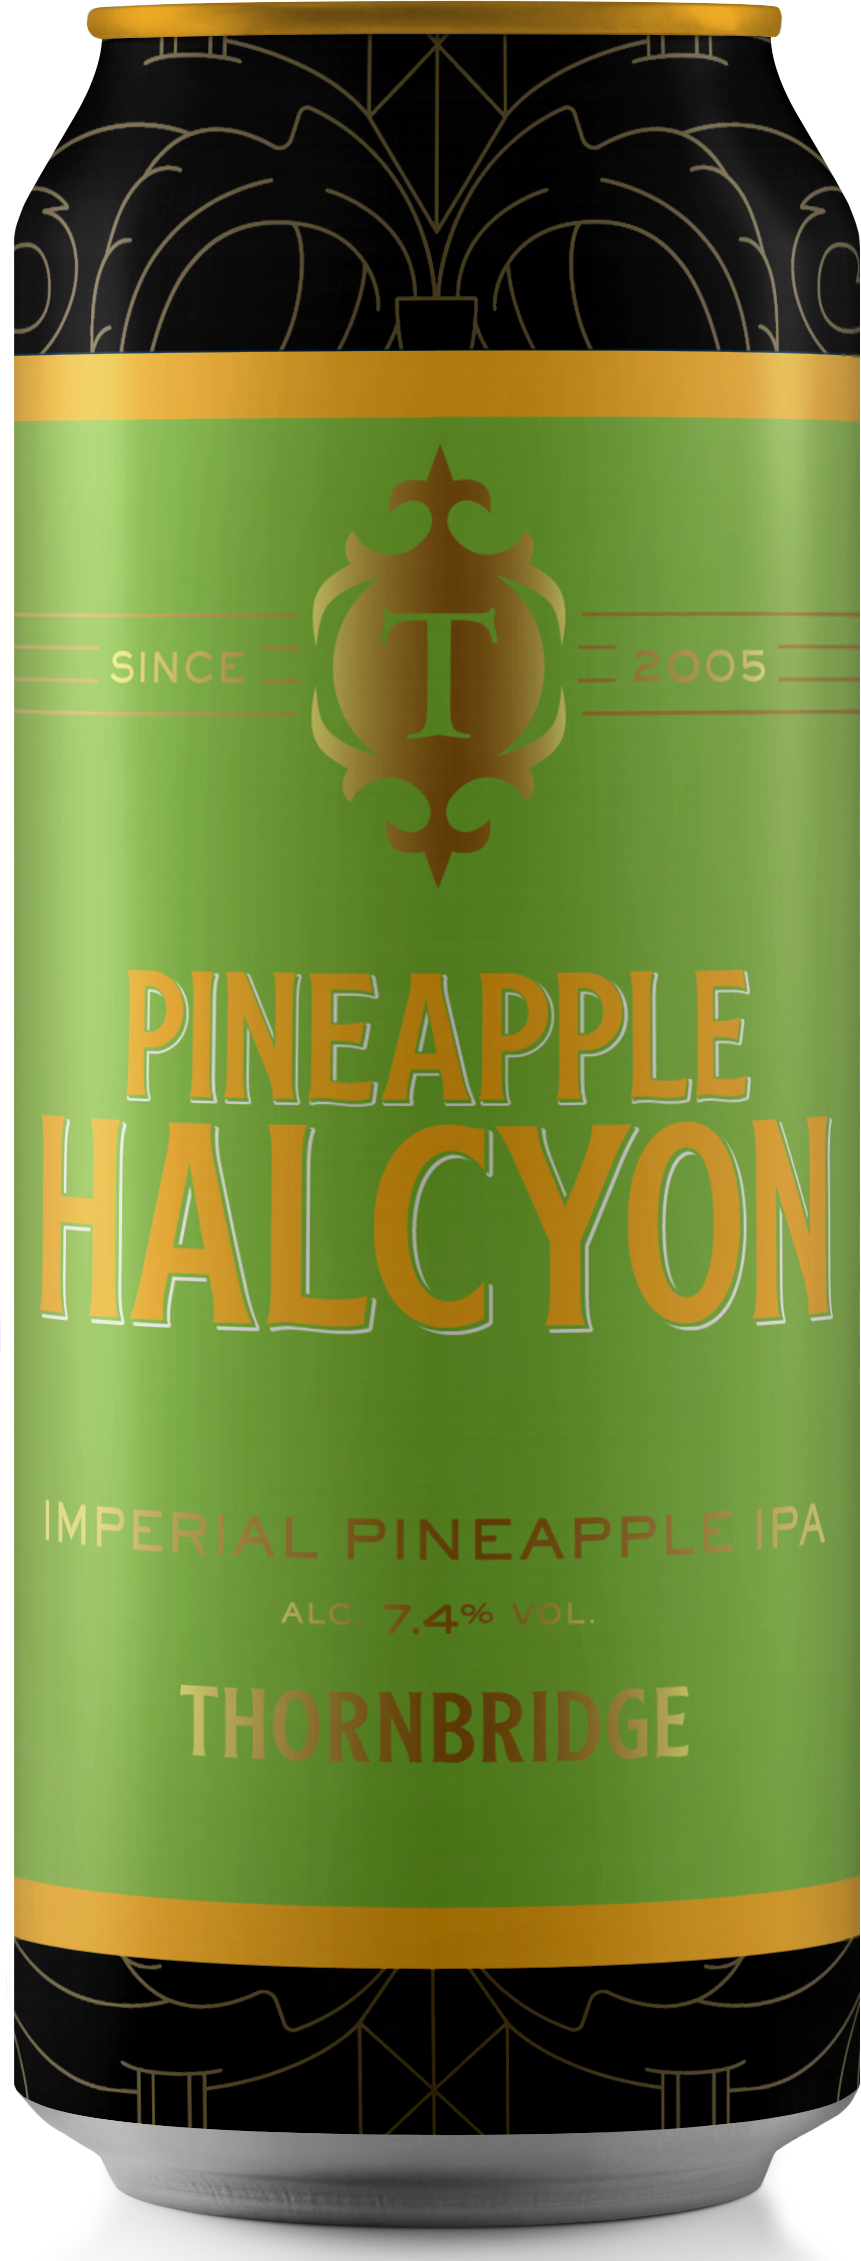 Thornbridge Pineapple Halcyon